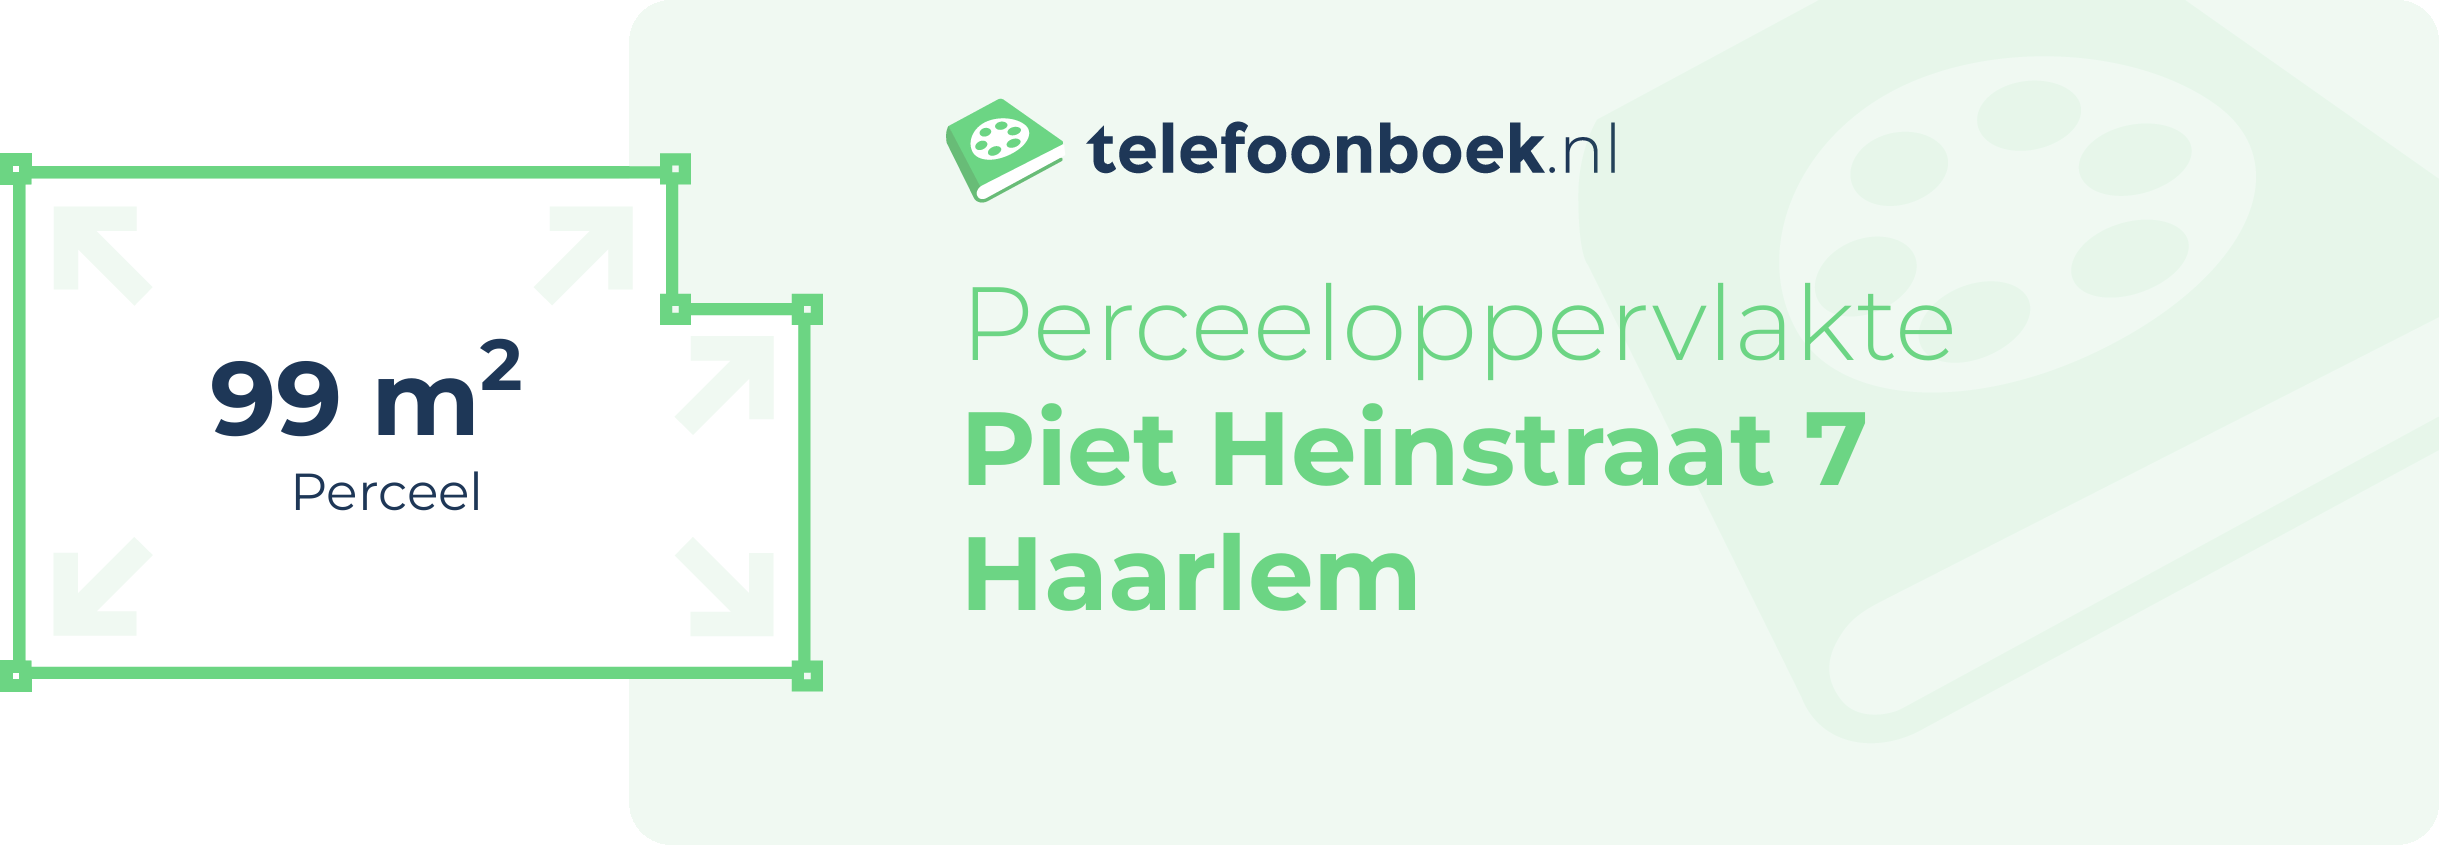 Perceeloppervlakte Piet Heinstraat 7 Haarlem